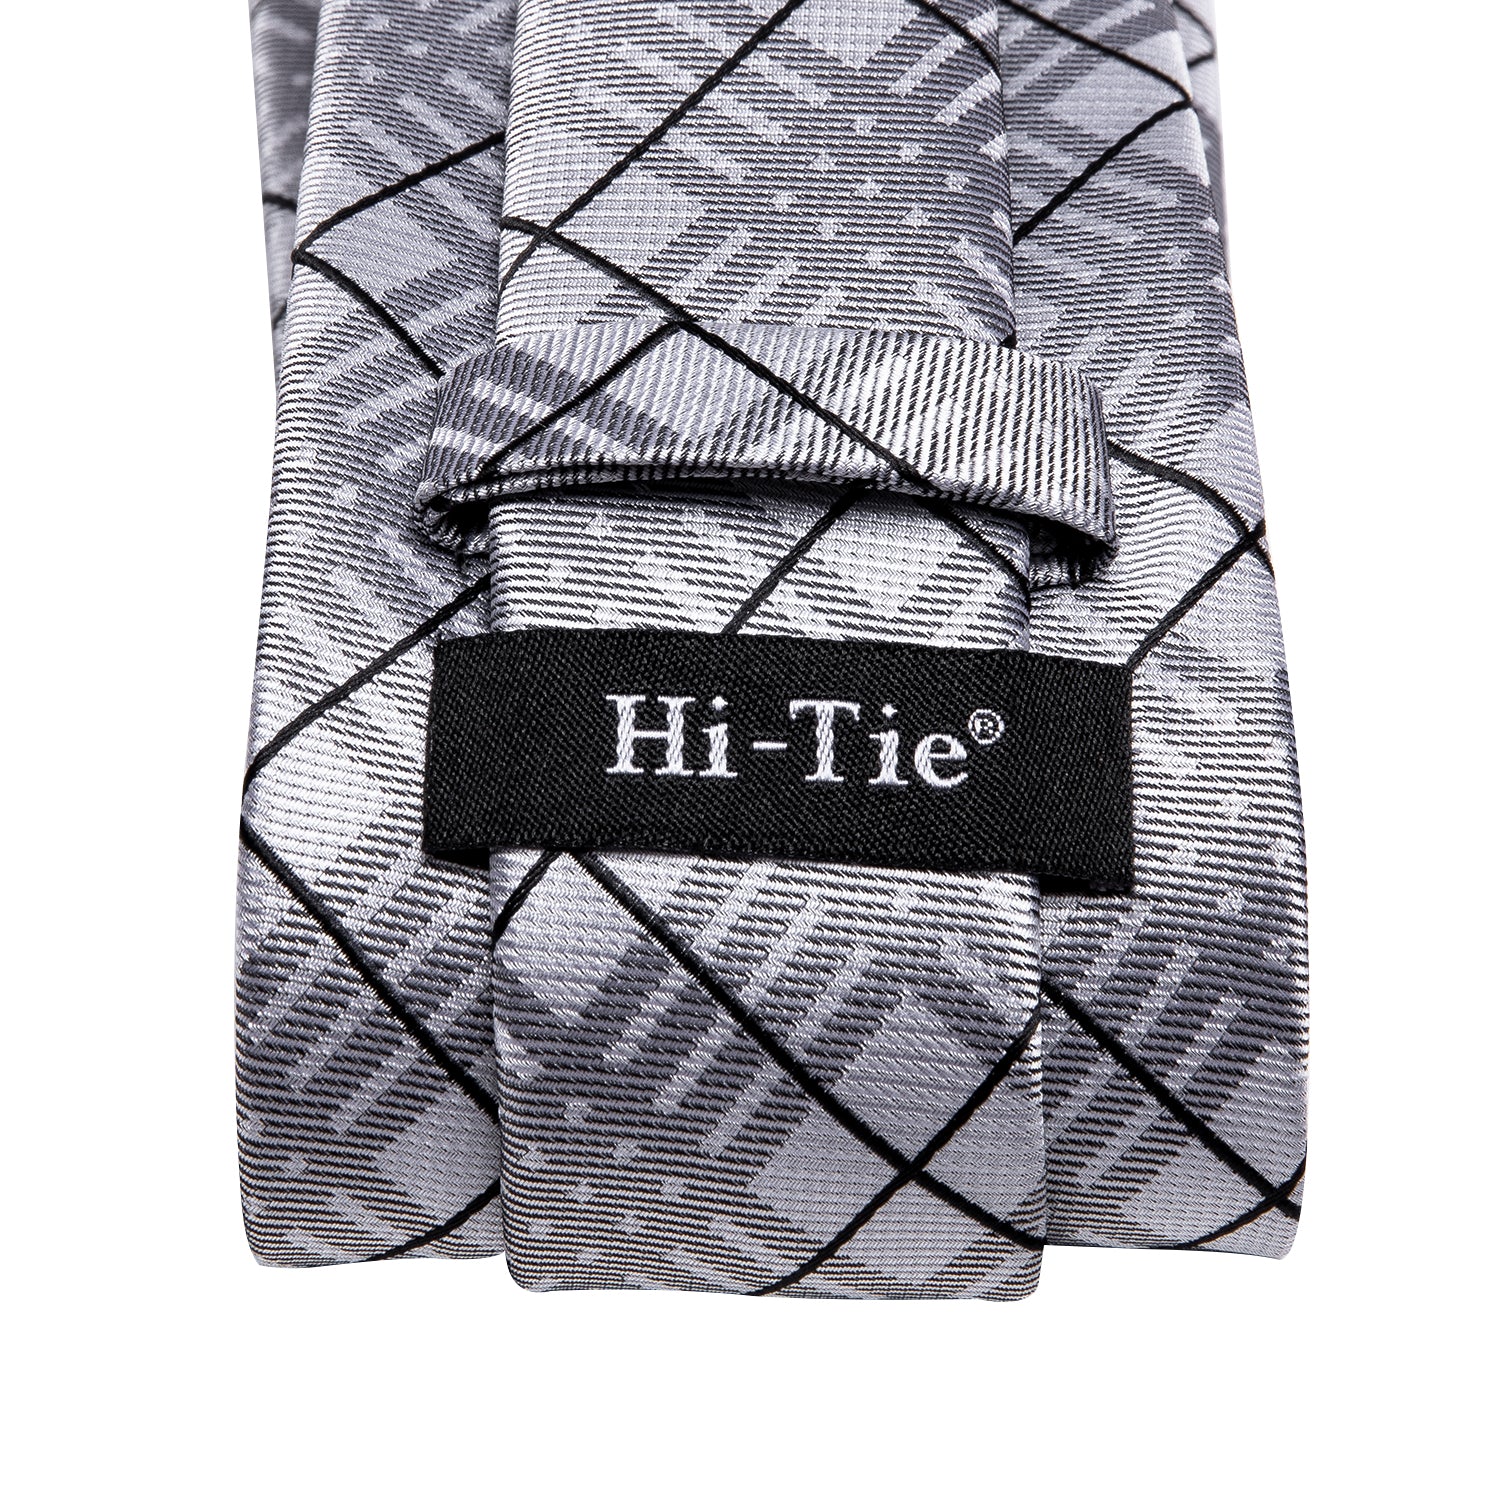 Grey Black Plaid Tie Pocket Square Cufflinks Set